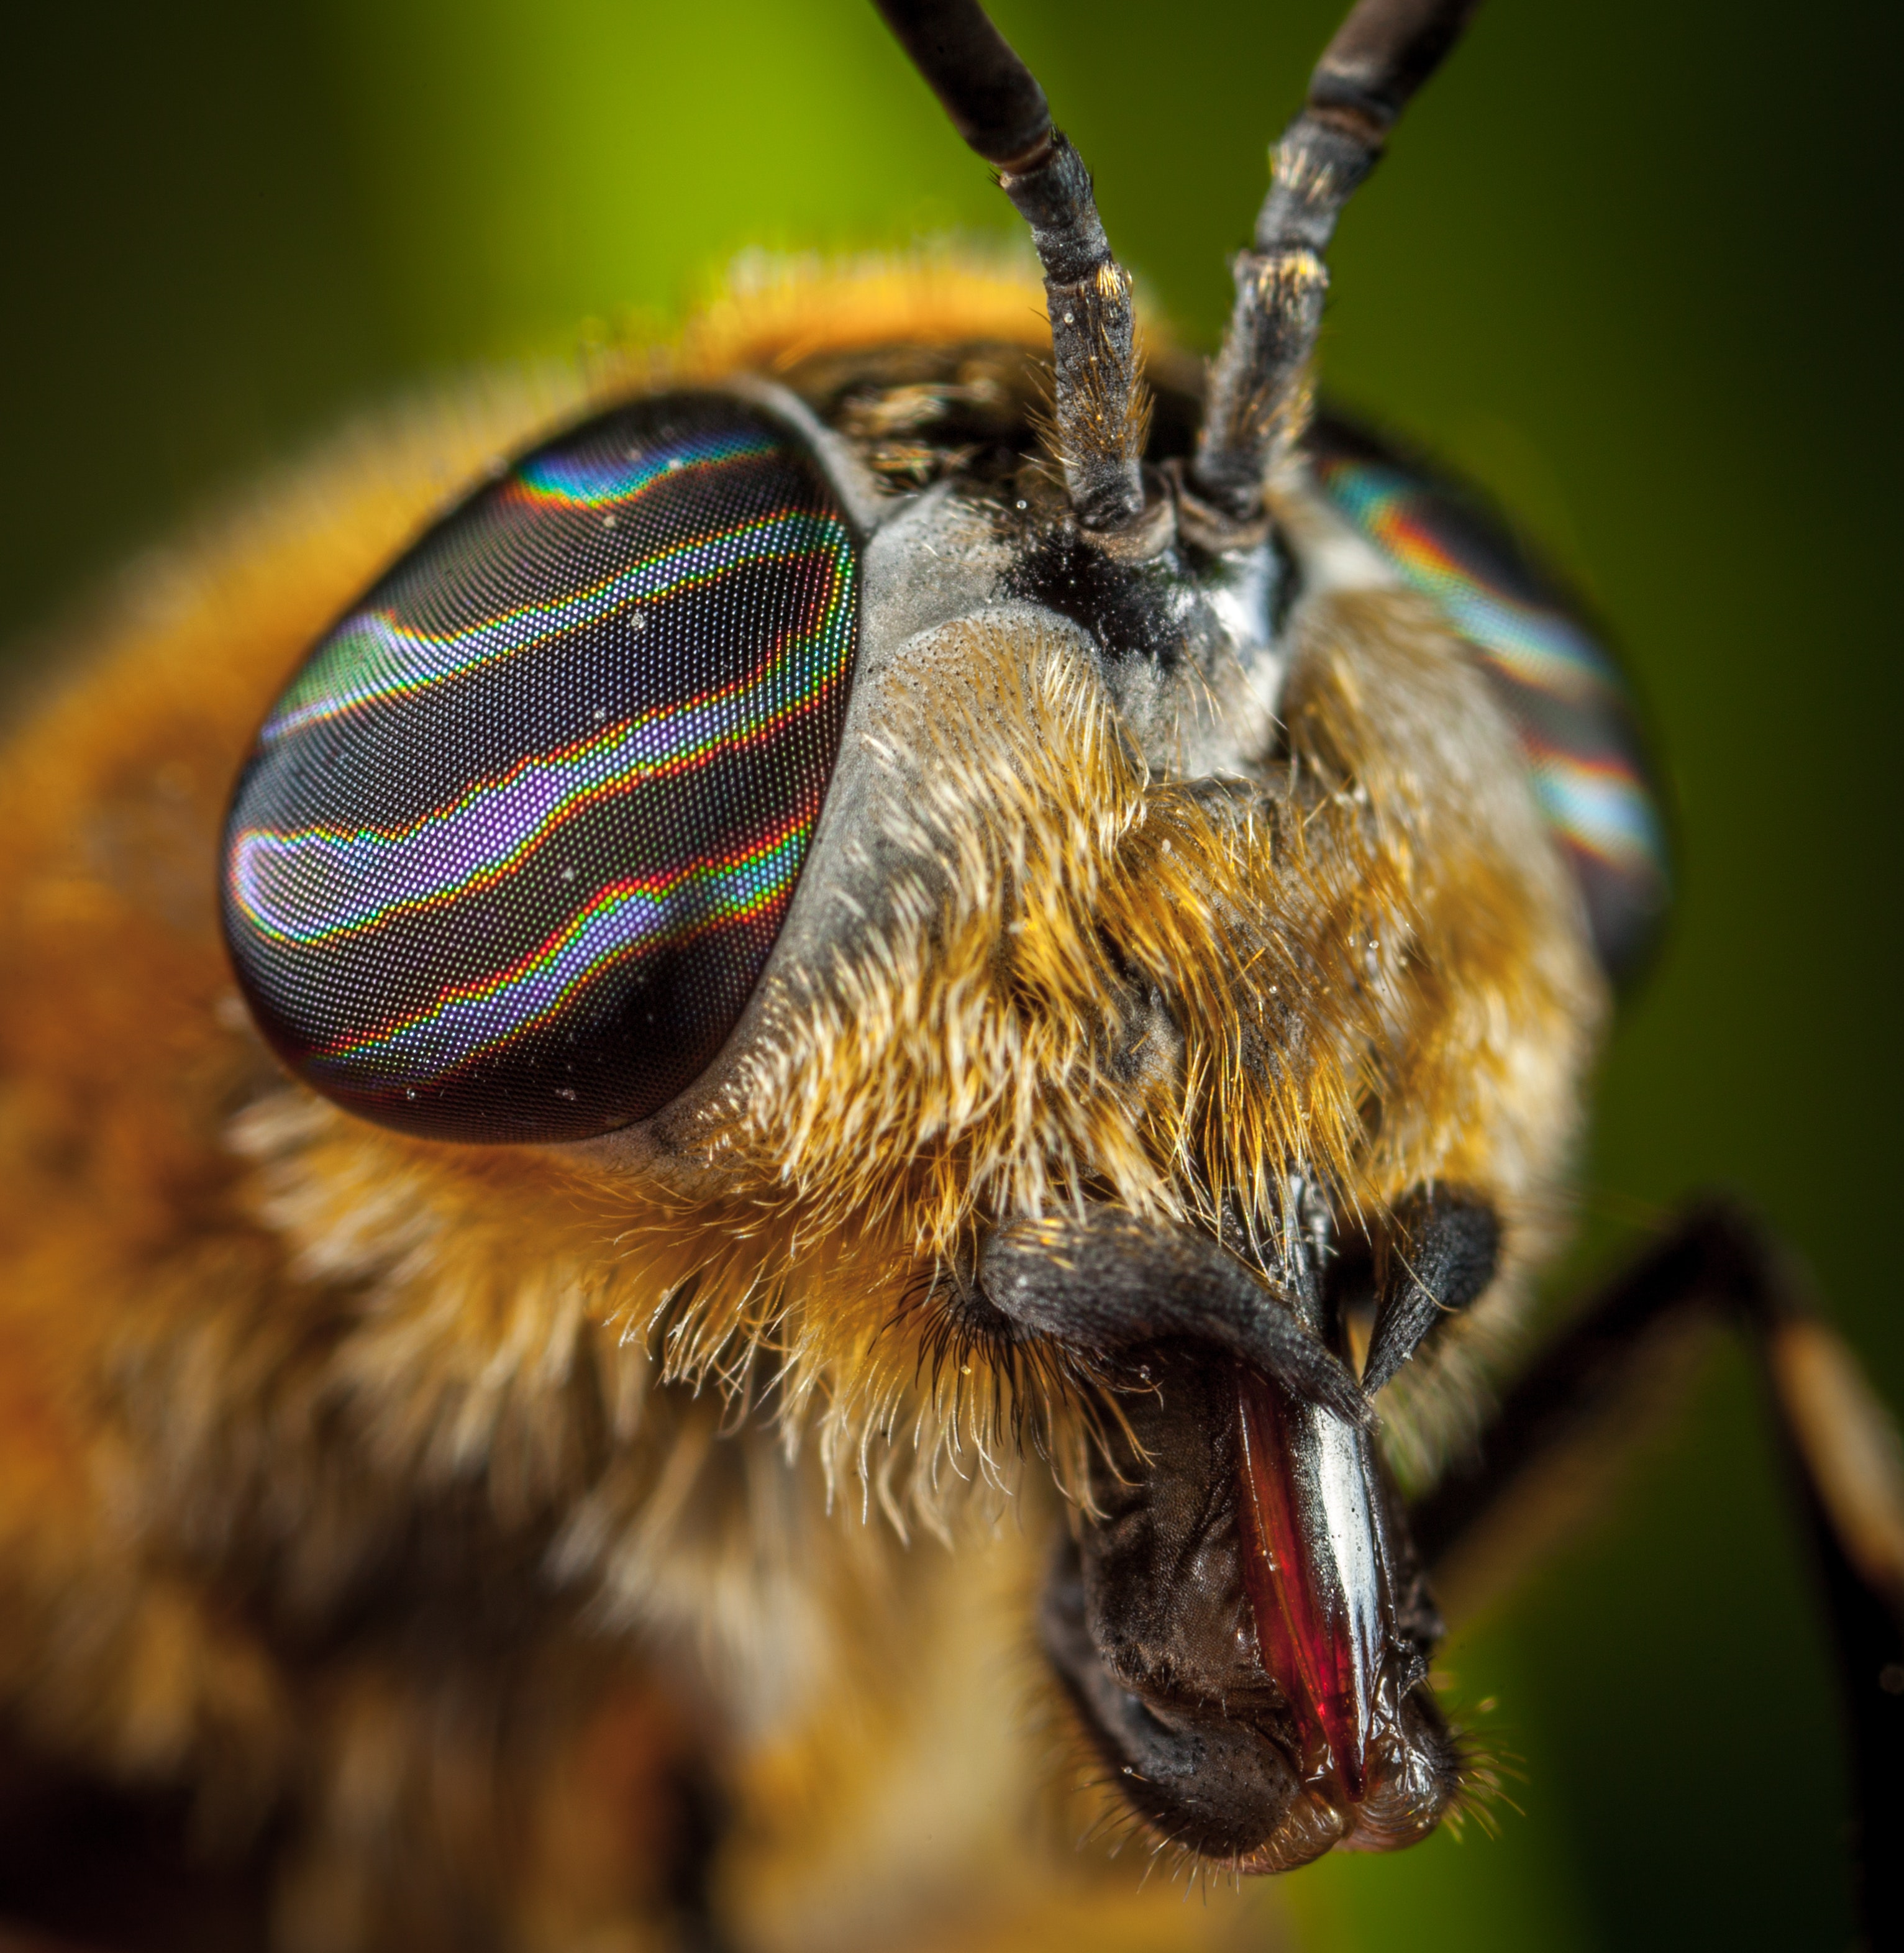 Bee Photos · Pexels · Free Stock Photos